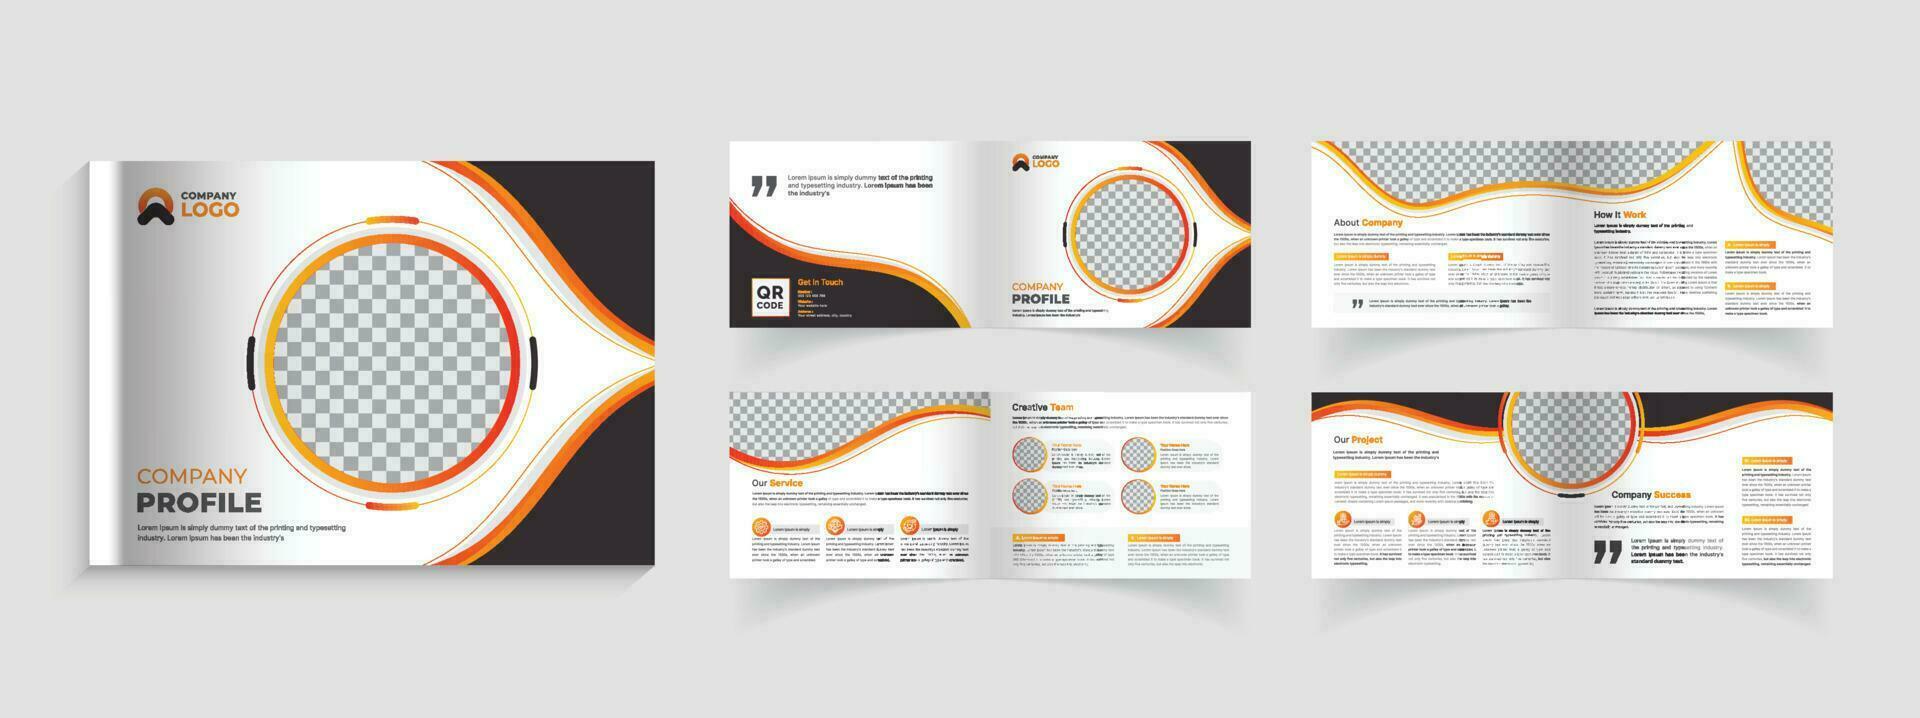 Landscape corporate brochure design vector